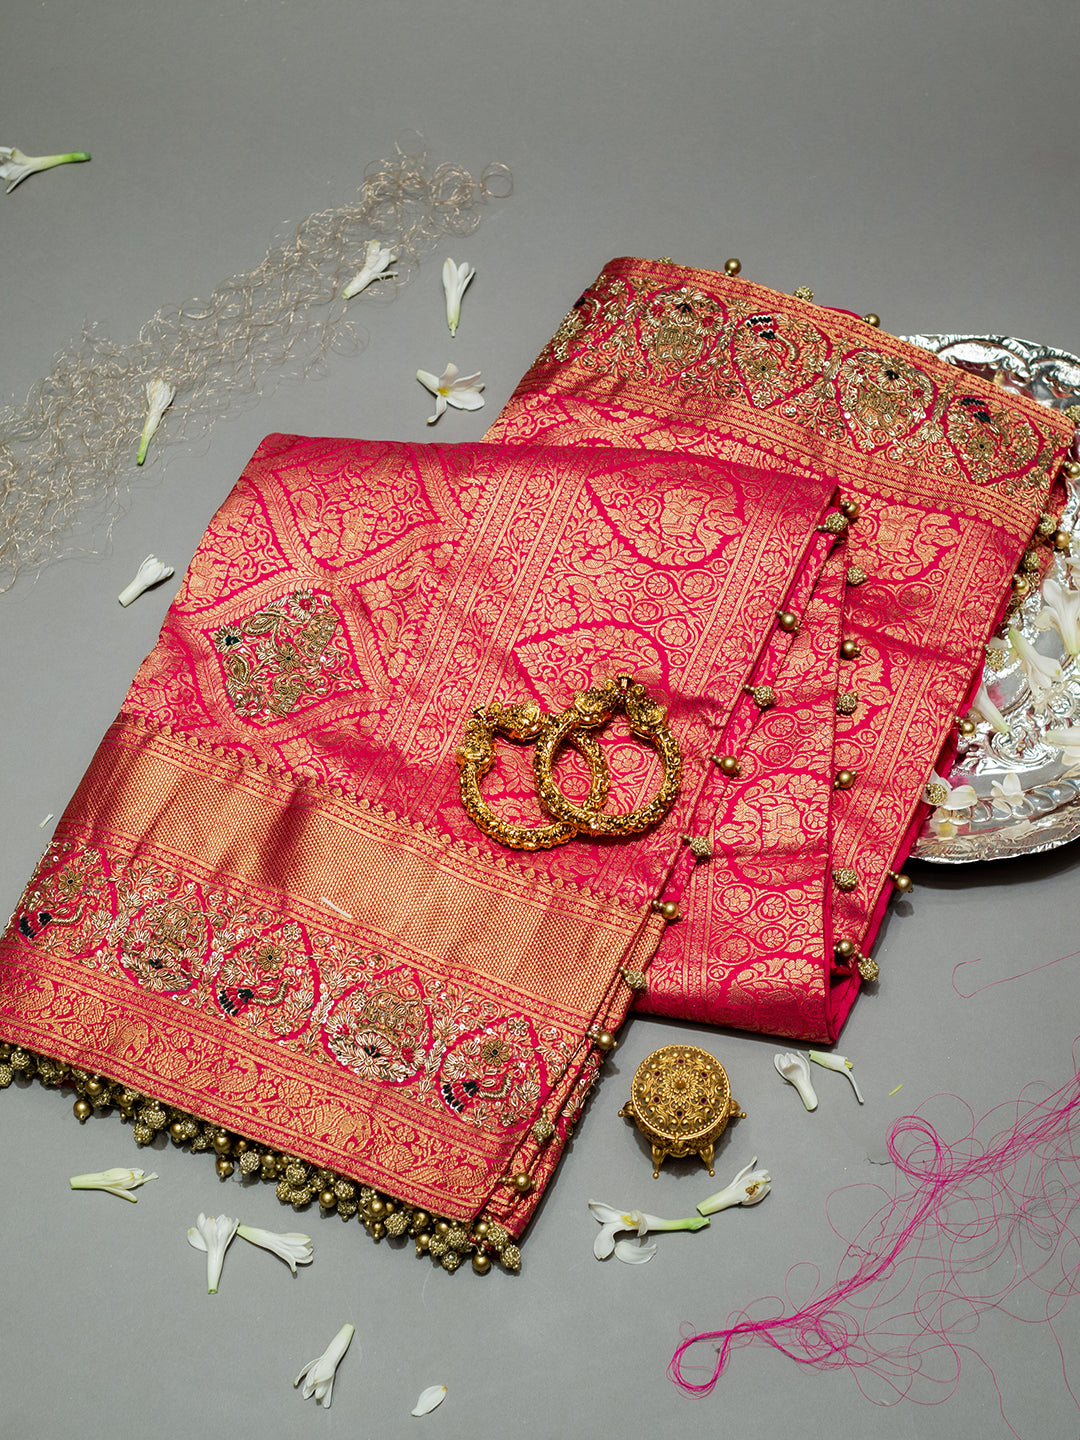 Silk Saree Wedding Trousseau Packing